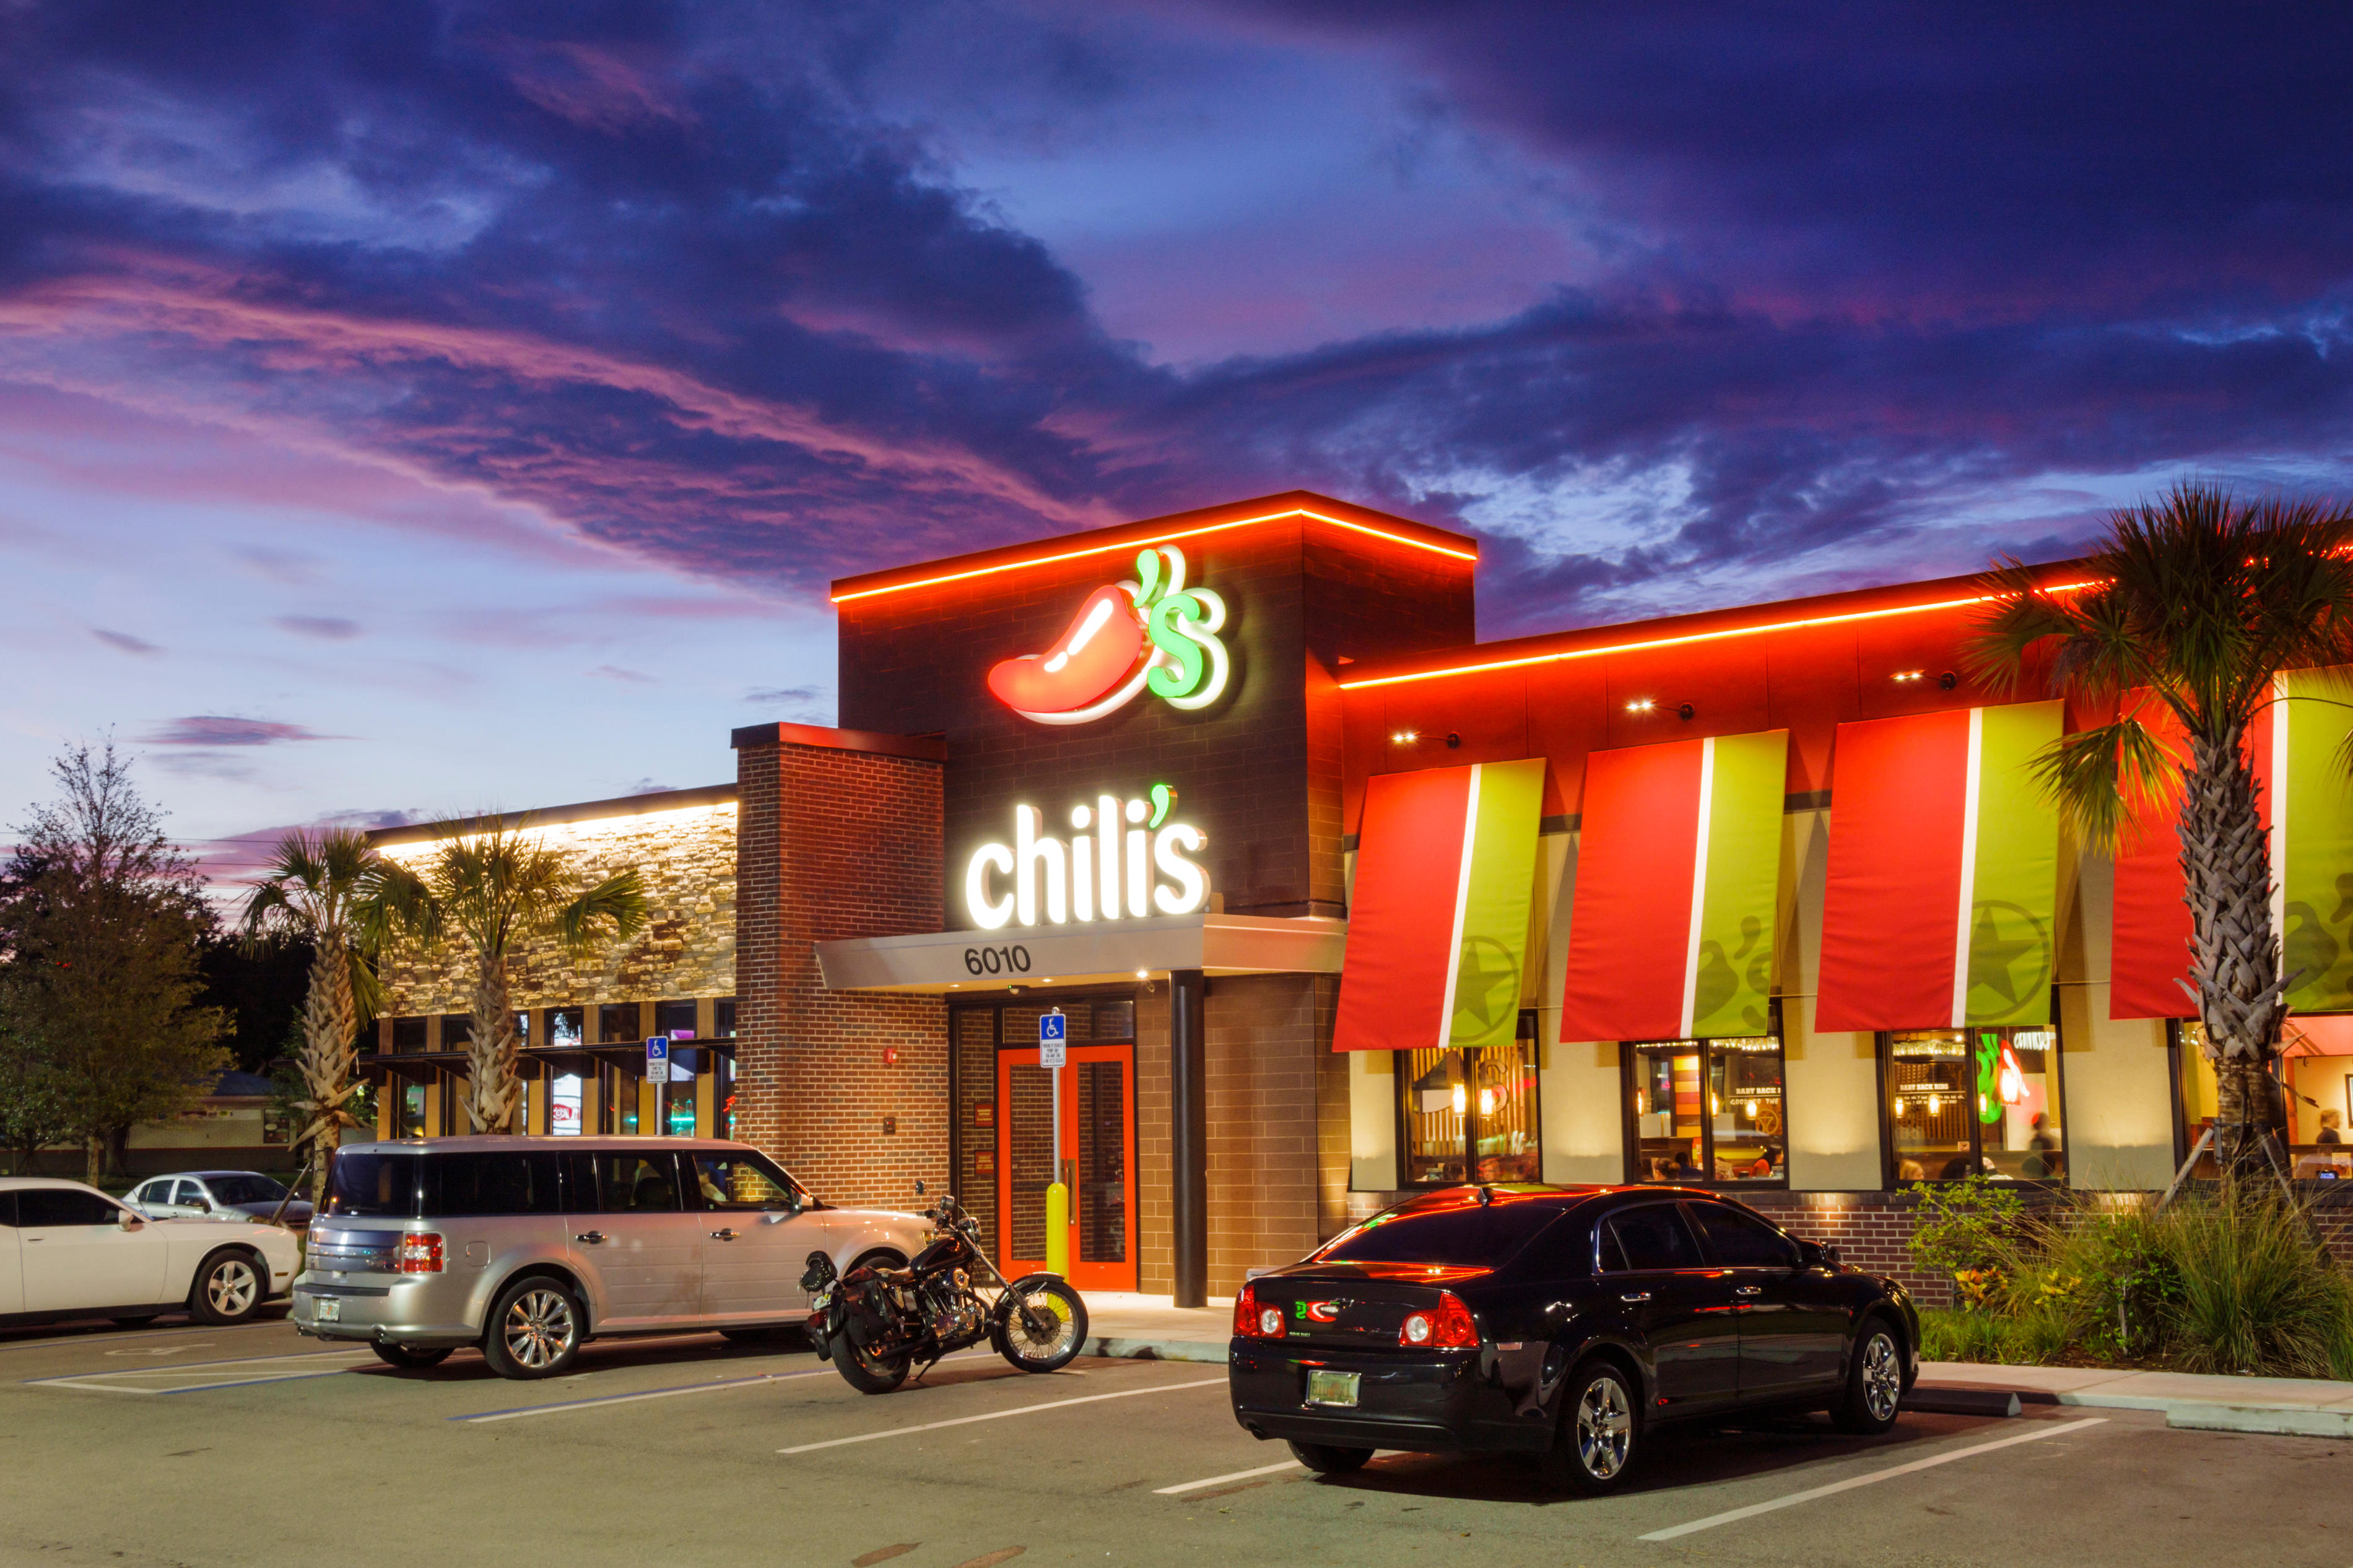 Florida Ellenton Chili's restaurant chain franchise business casual dining building exterior lit sign logo branding parking car dusk neon night